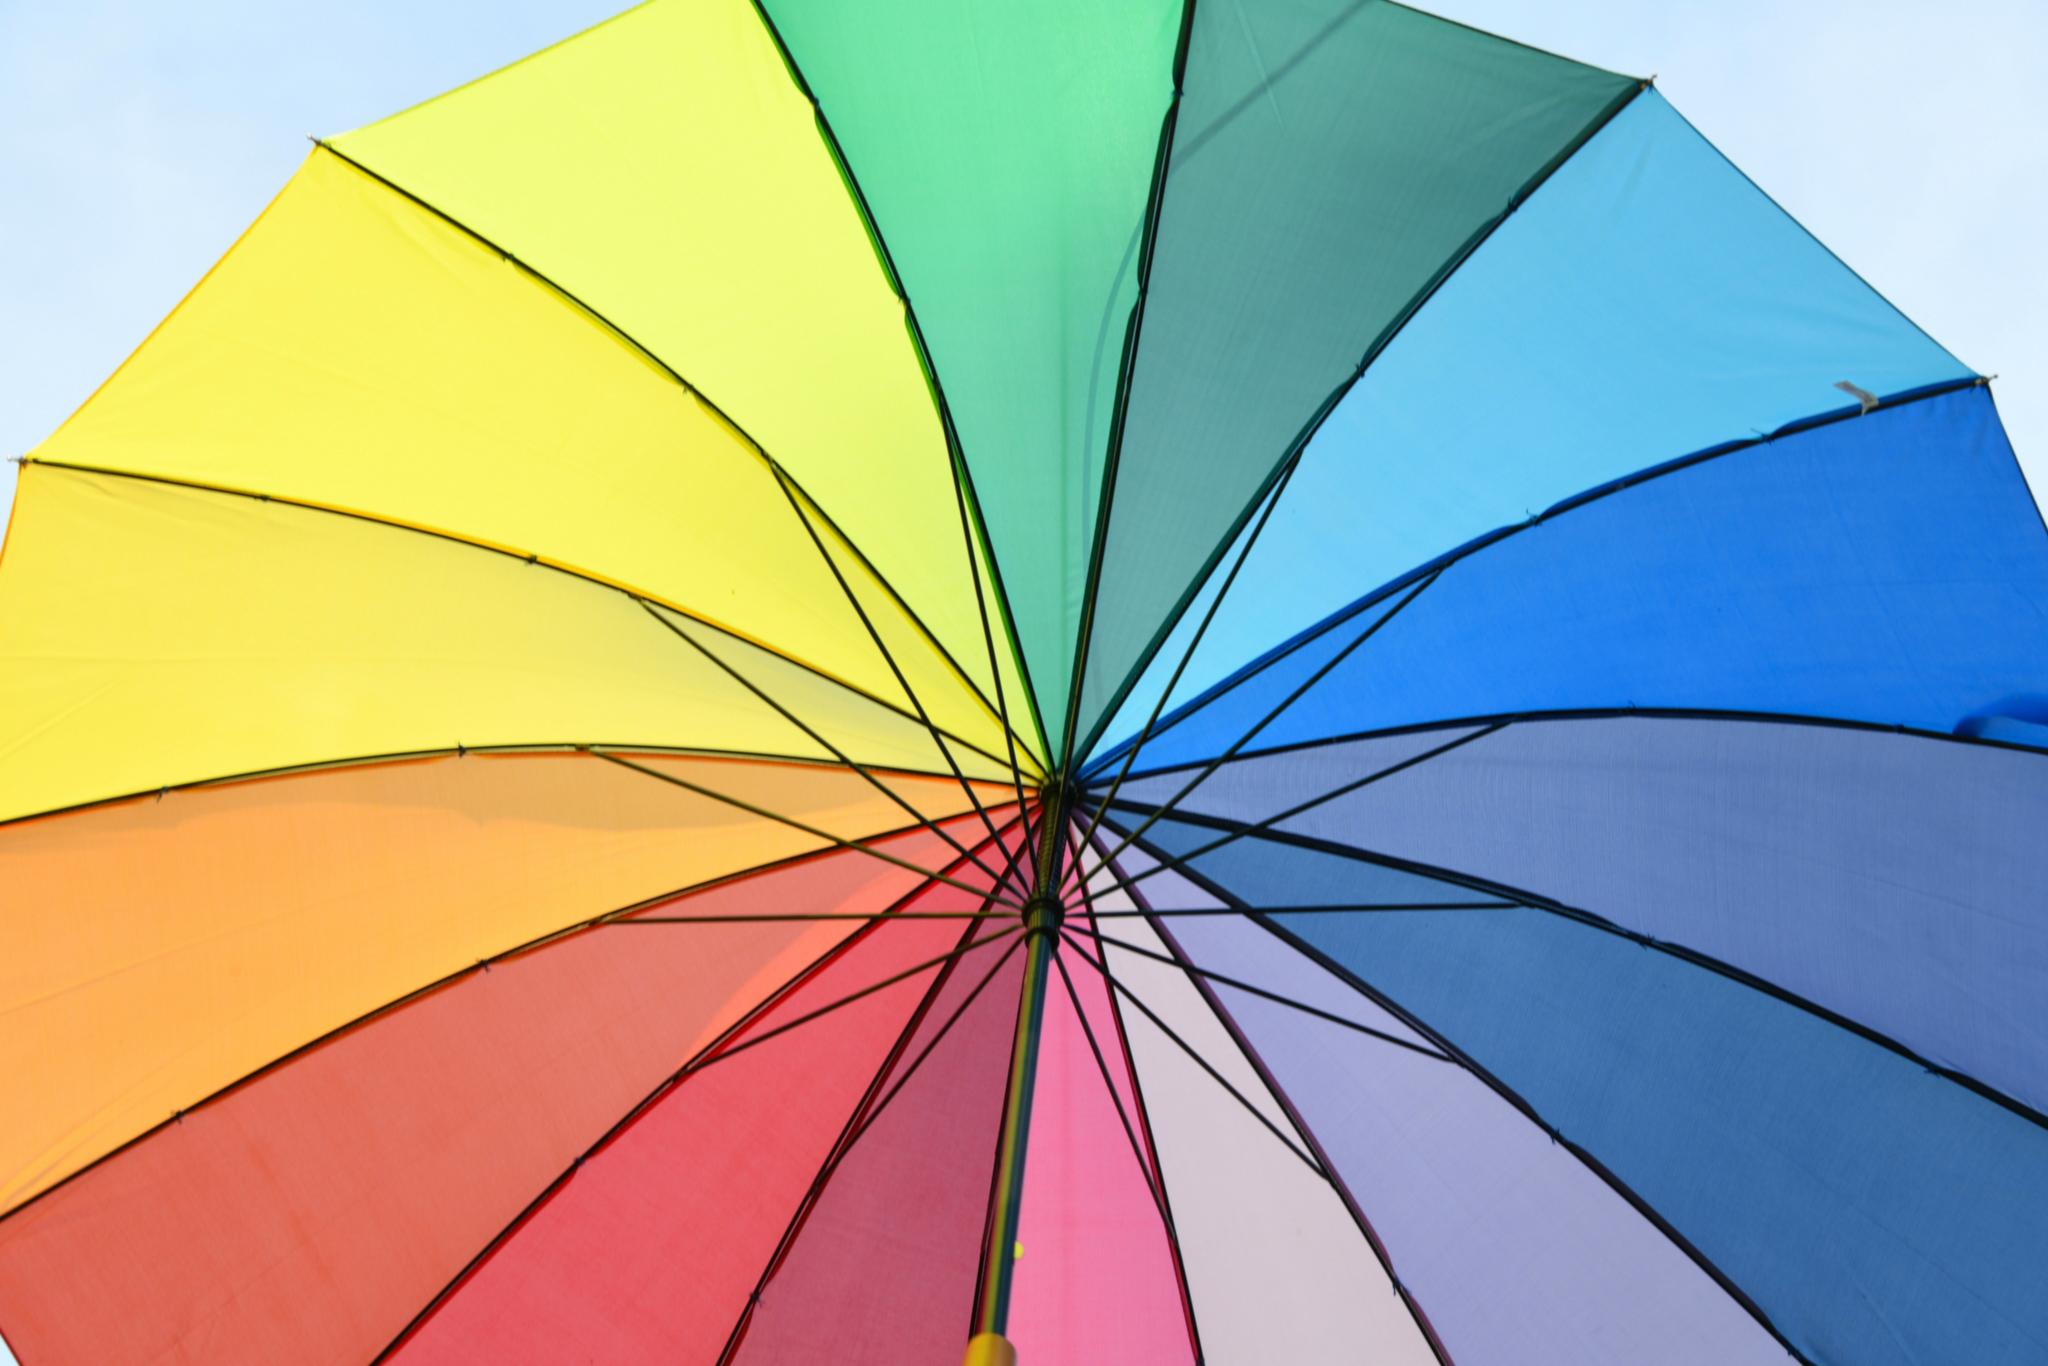 Regenbogenschirm_by_Wolfgang_Cibura_pfarrbriefservice.jpg